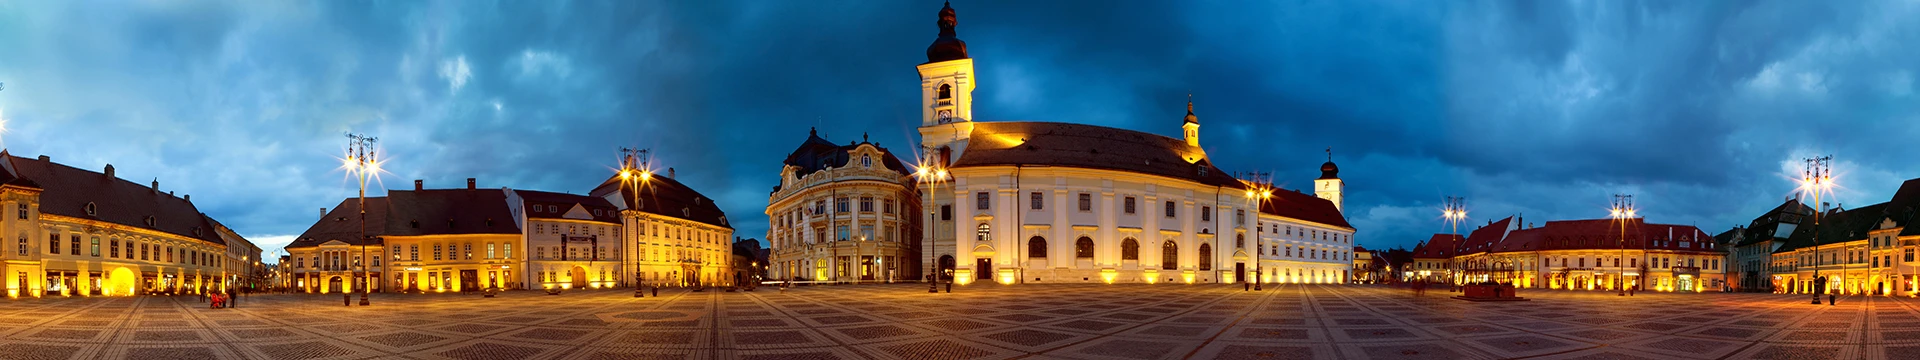 Hotels in Romania